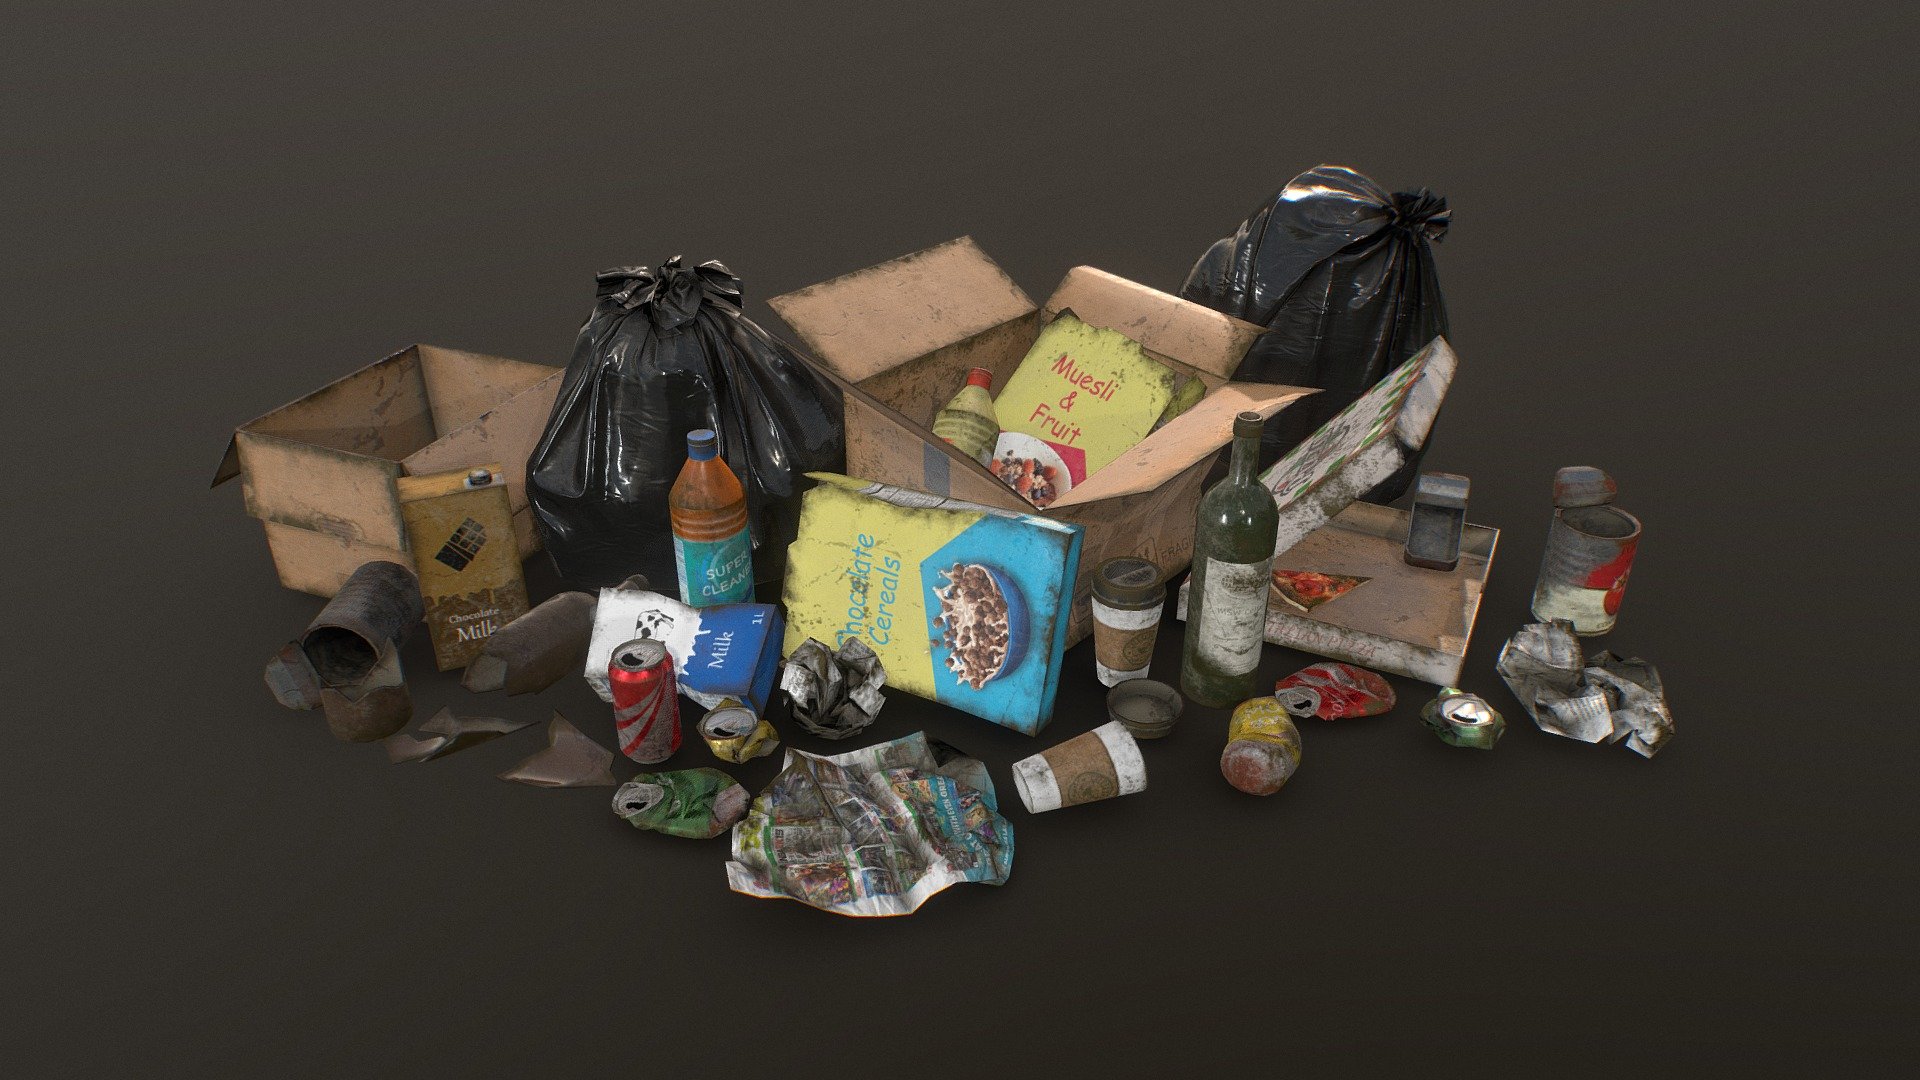 Trash Bag Full of Money 3D Model $39 - .max .3ds .blend .c4d .fbx